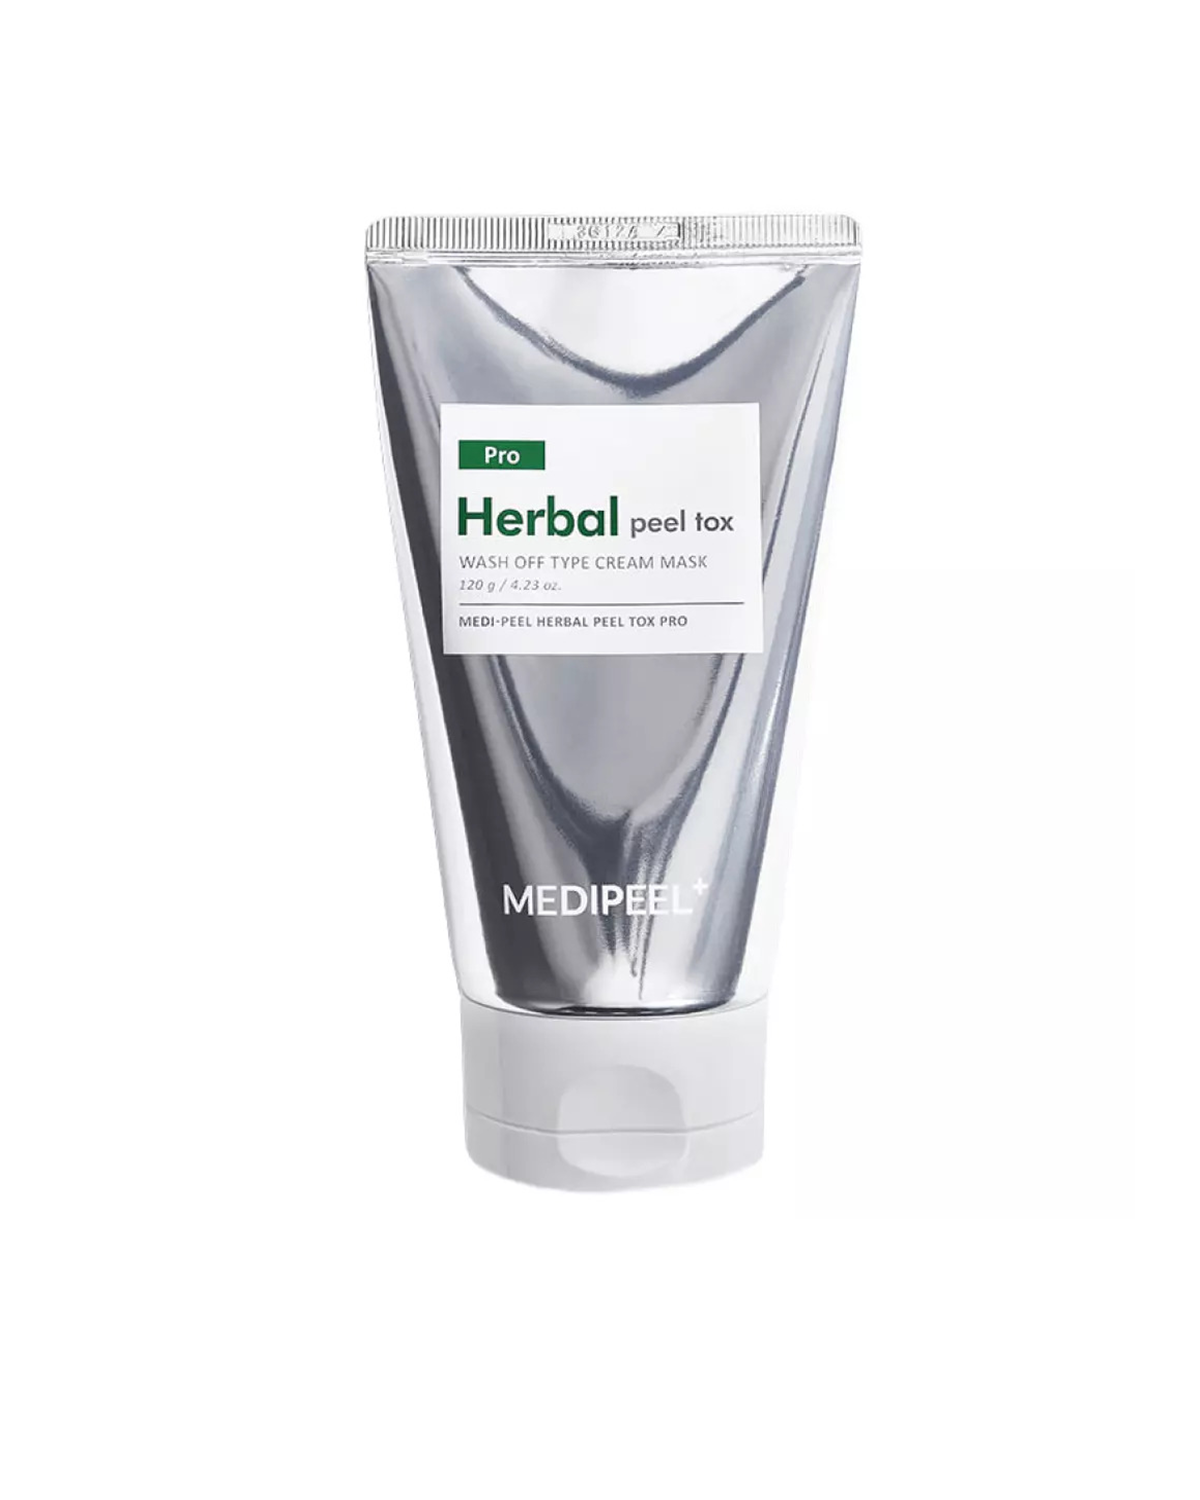 MEDI-PEEL Herbal Peel Tox Wash Off Type Cream Mask Pro 120 g